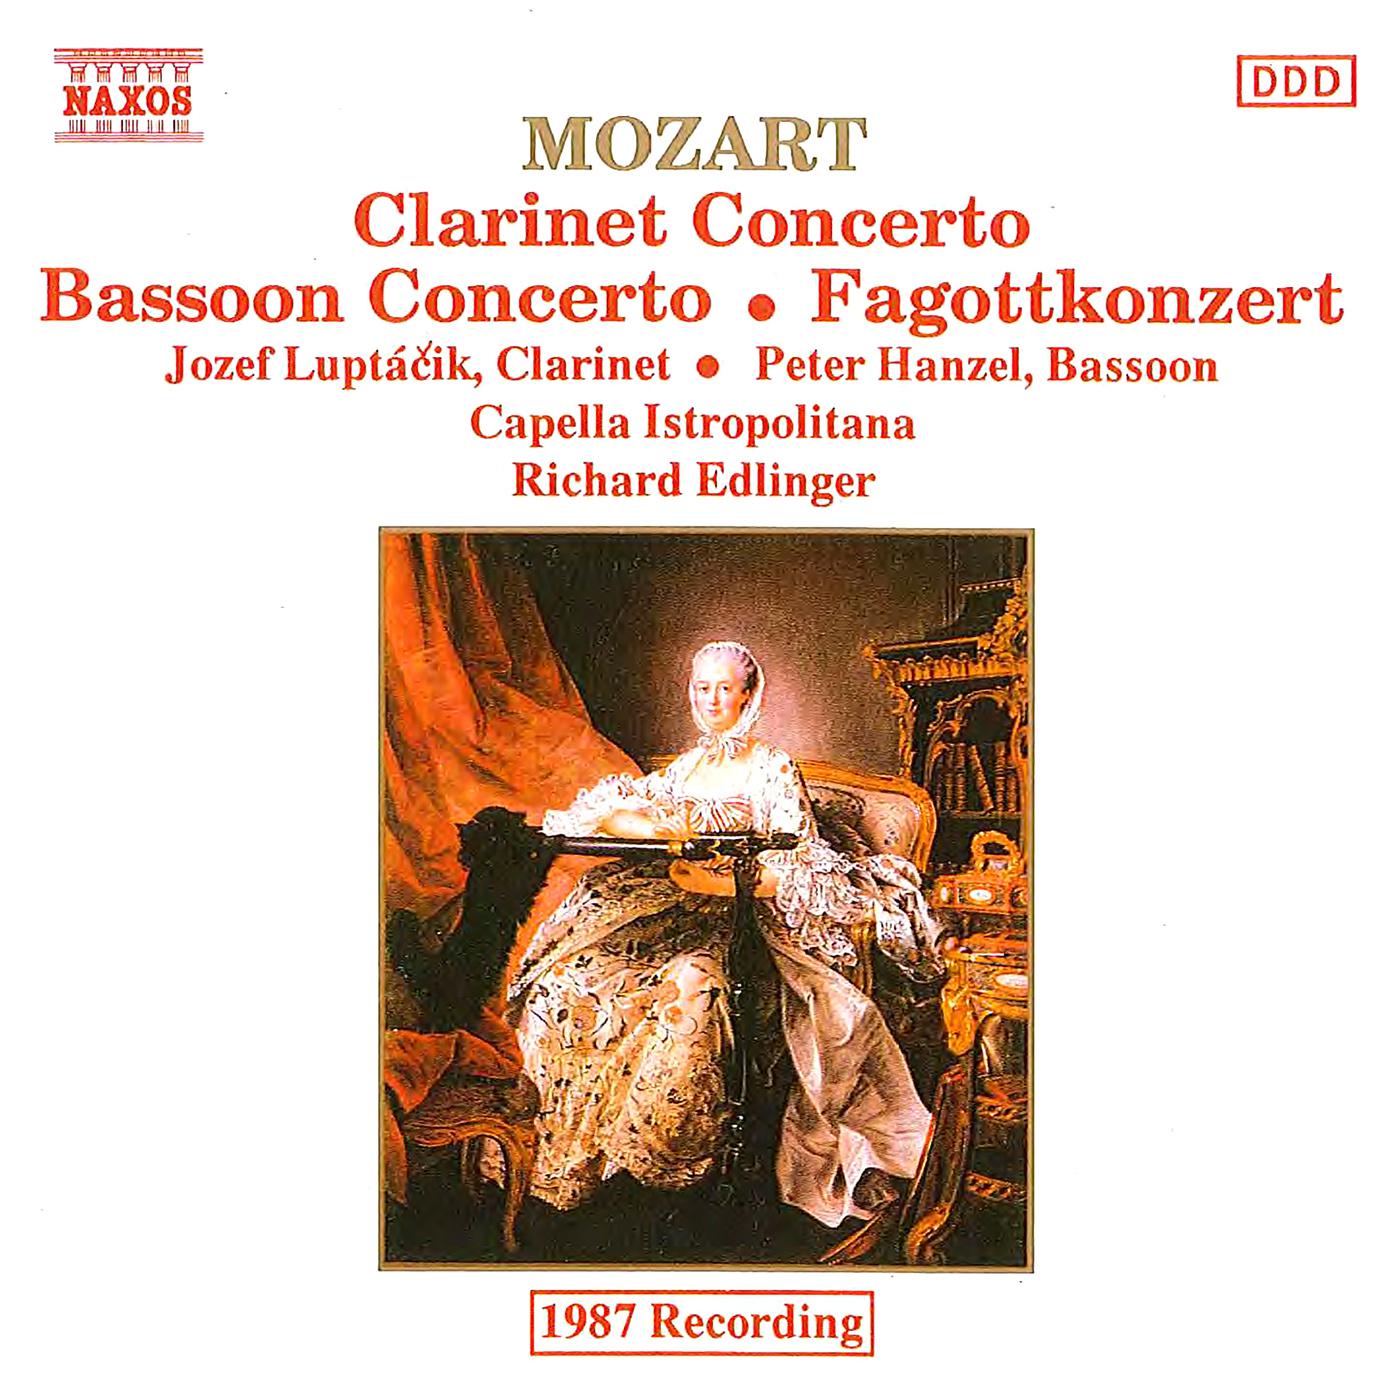 MOZART: Clarinet and Bassoon Concertos